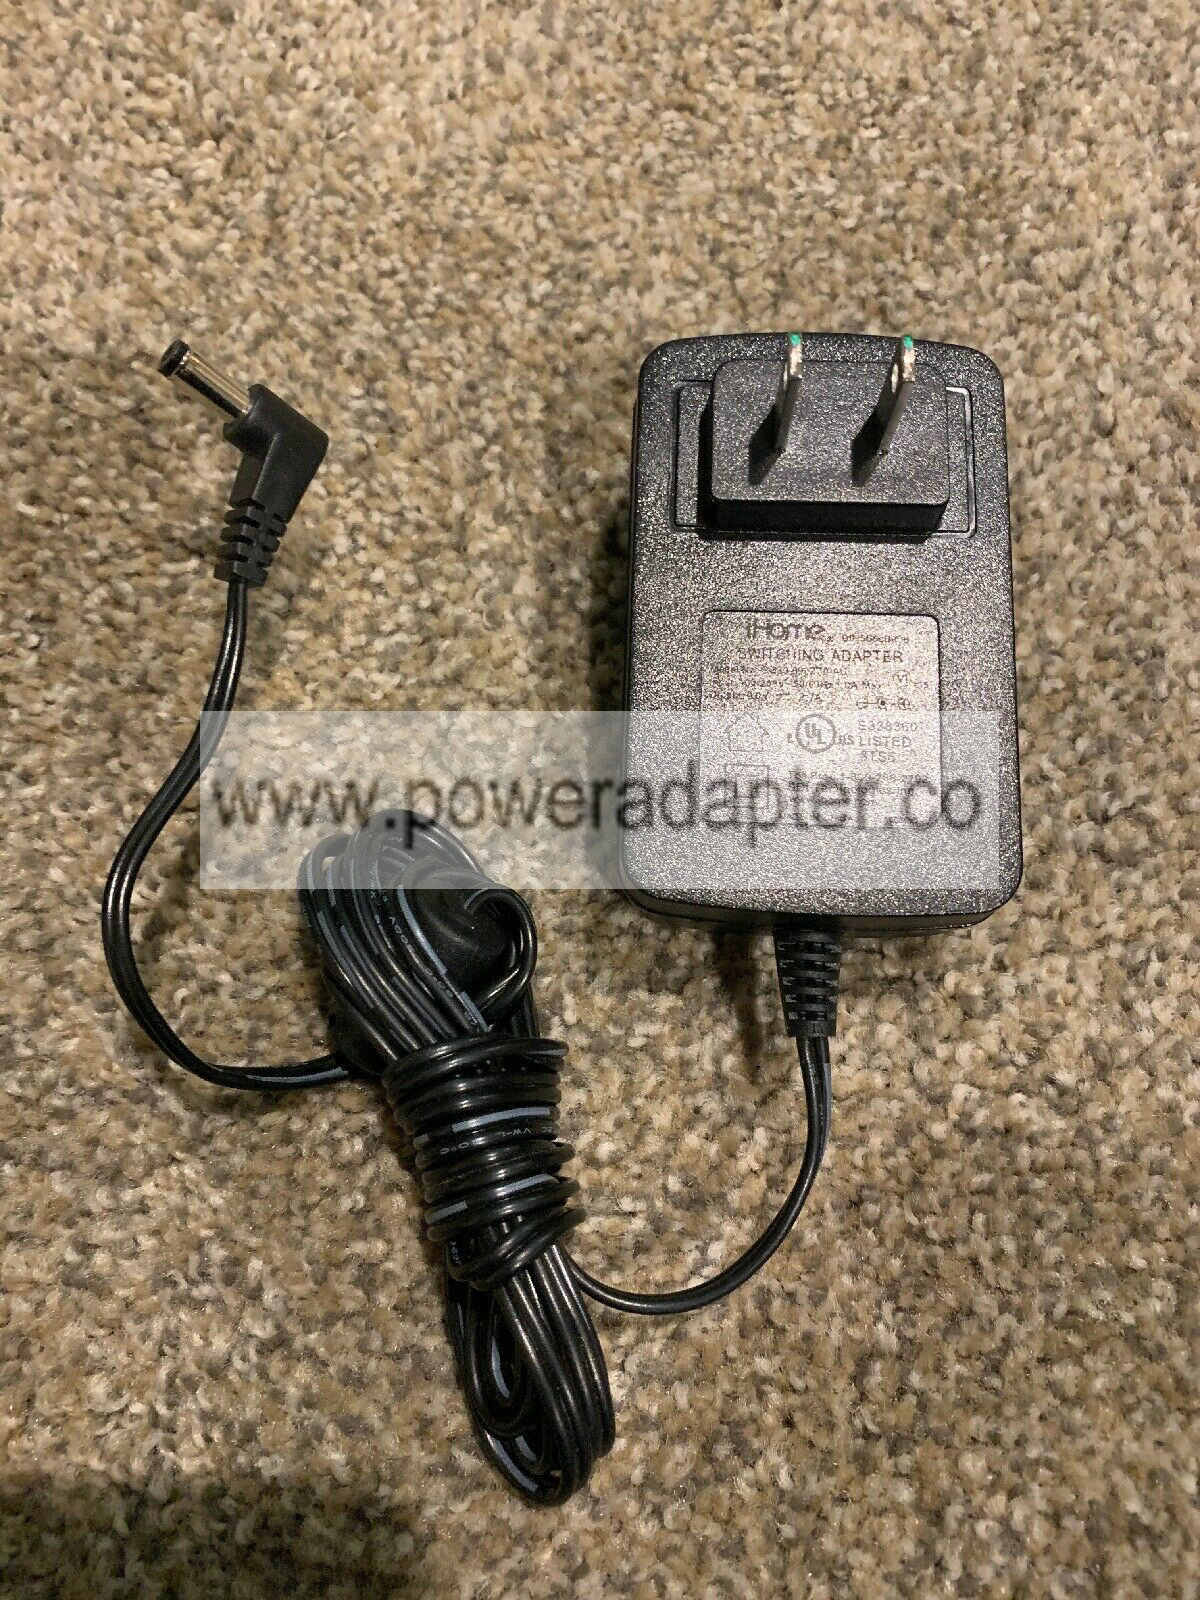 iHome Genuine Switching Adapter Cord Power Supply, GQ30-090270-AU, Black Brand: iHome MPN: GQ30-090270-AU iHome Ge - Click Image to Close